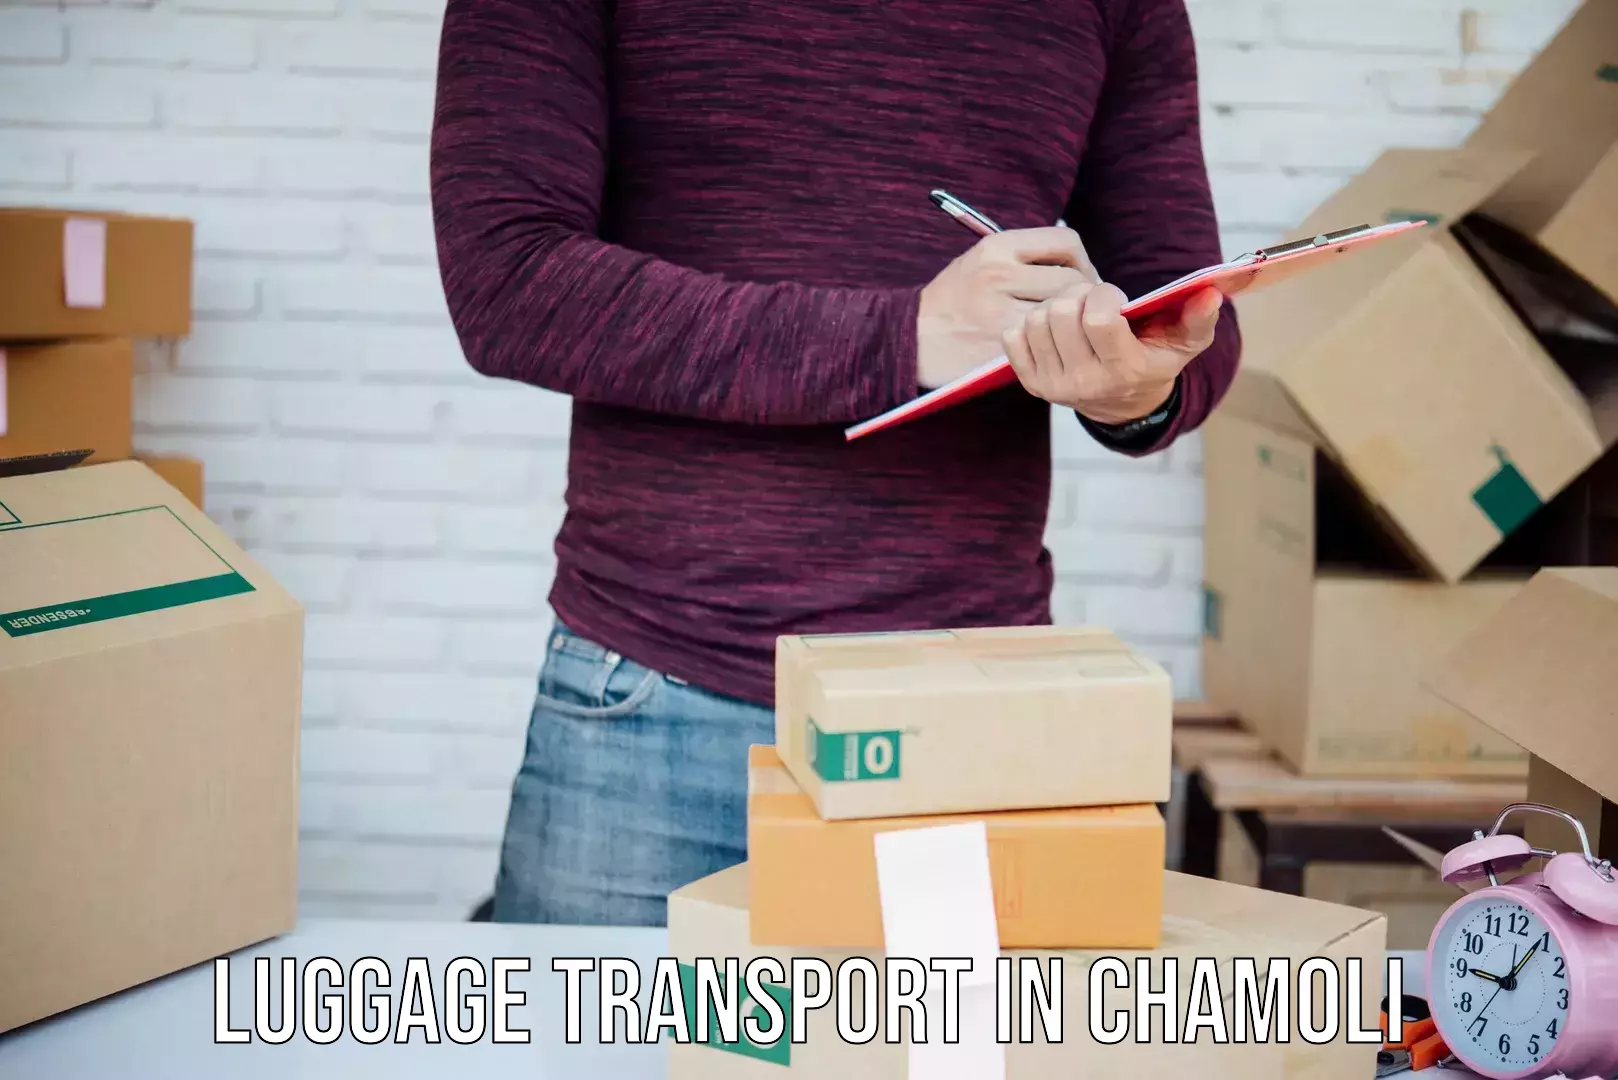 Luggage transport service in Chamoli